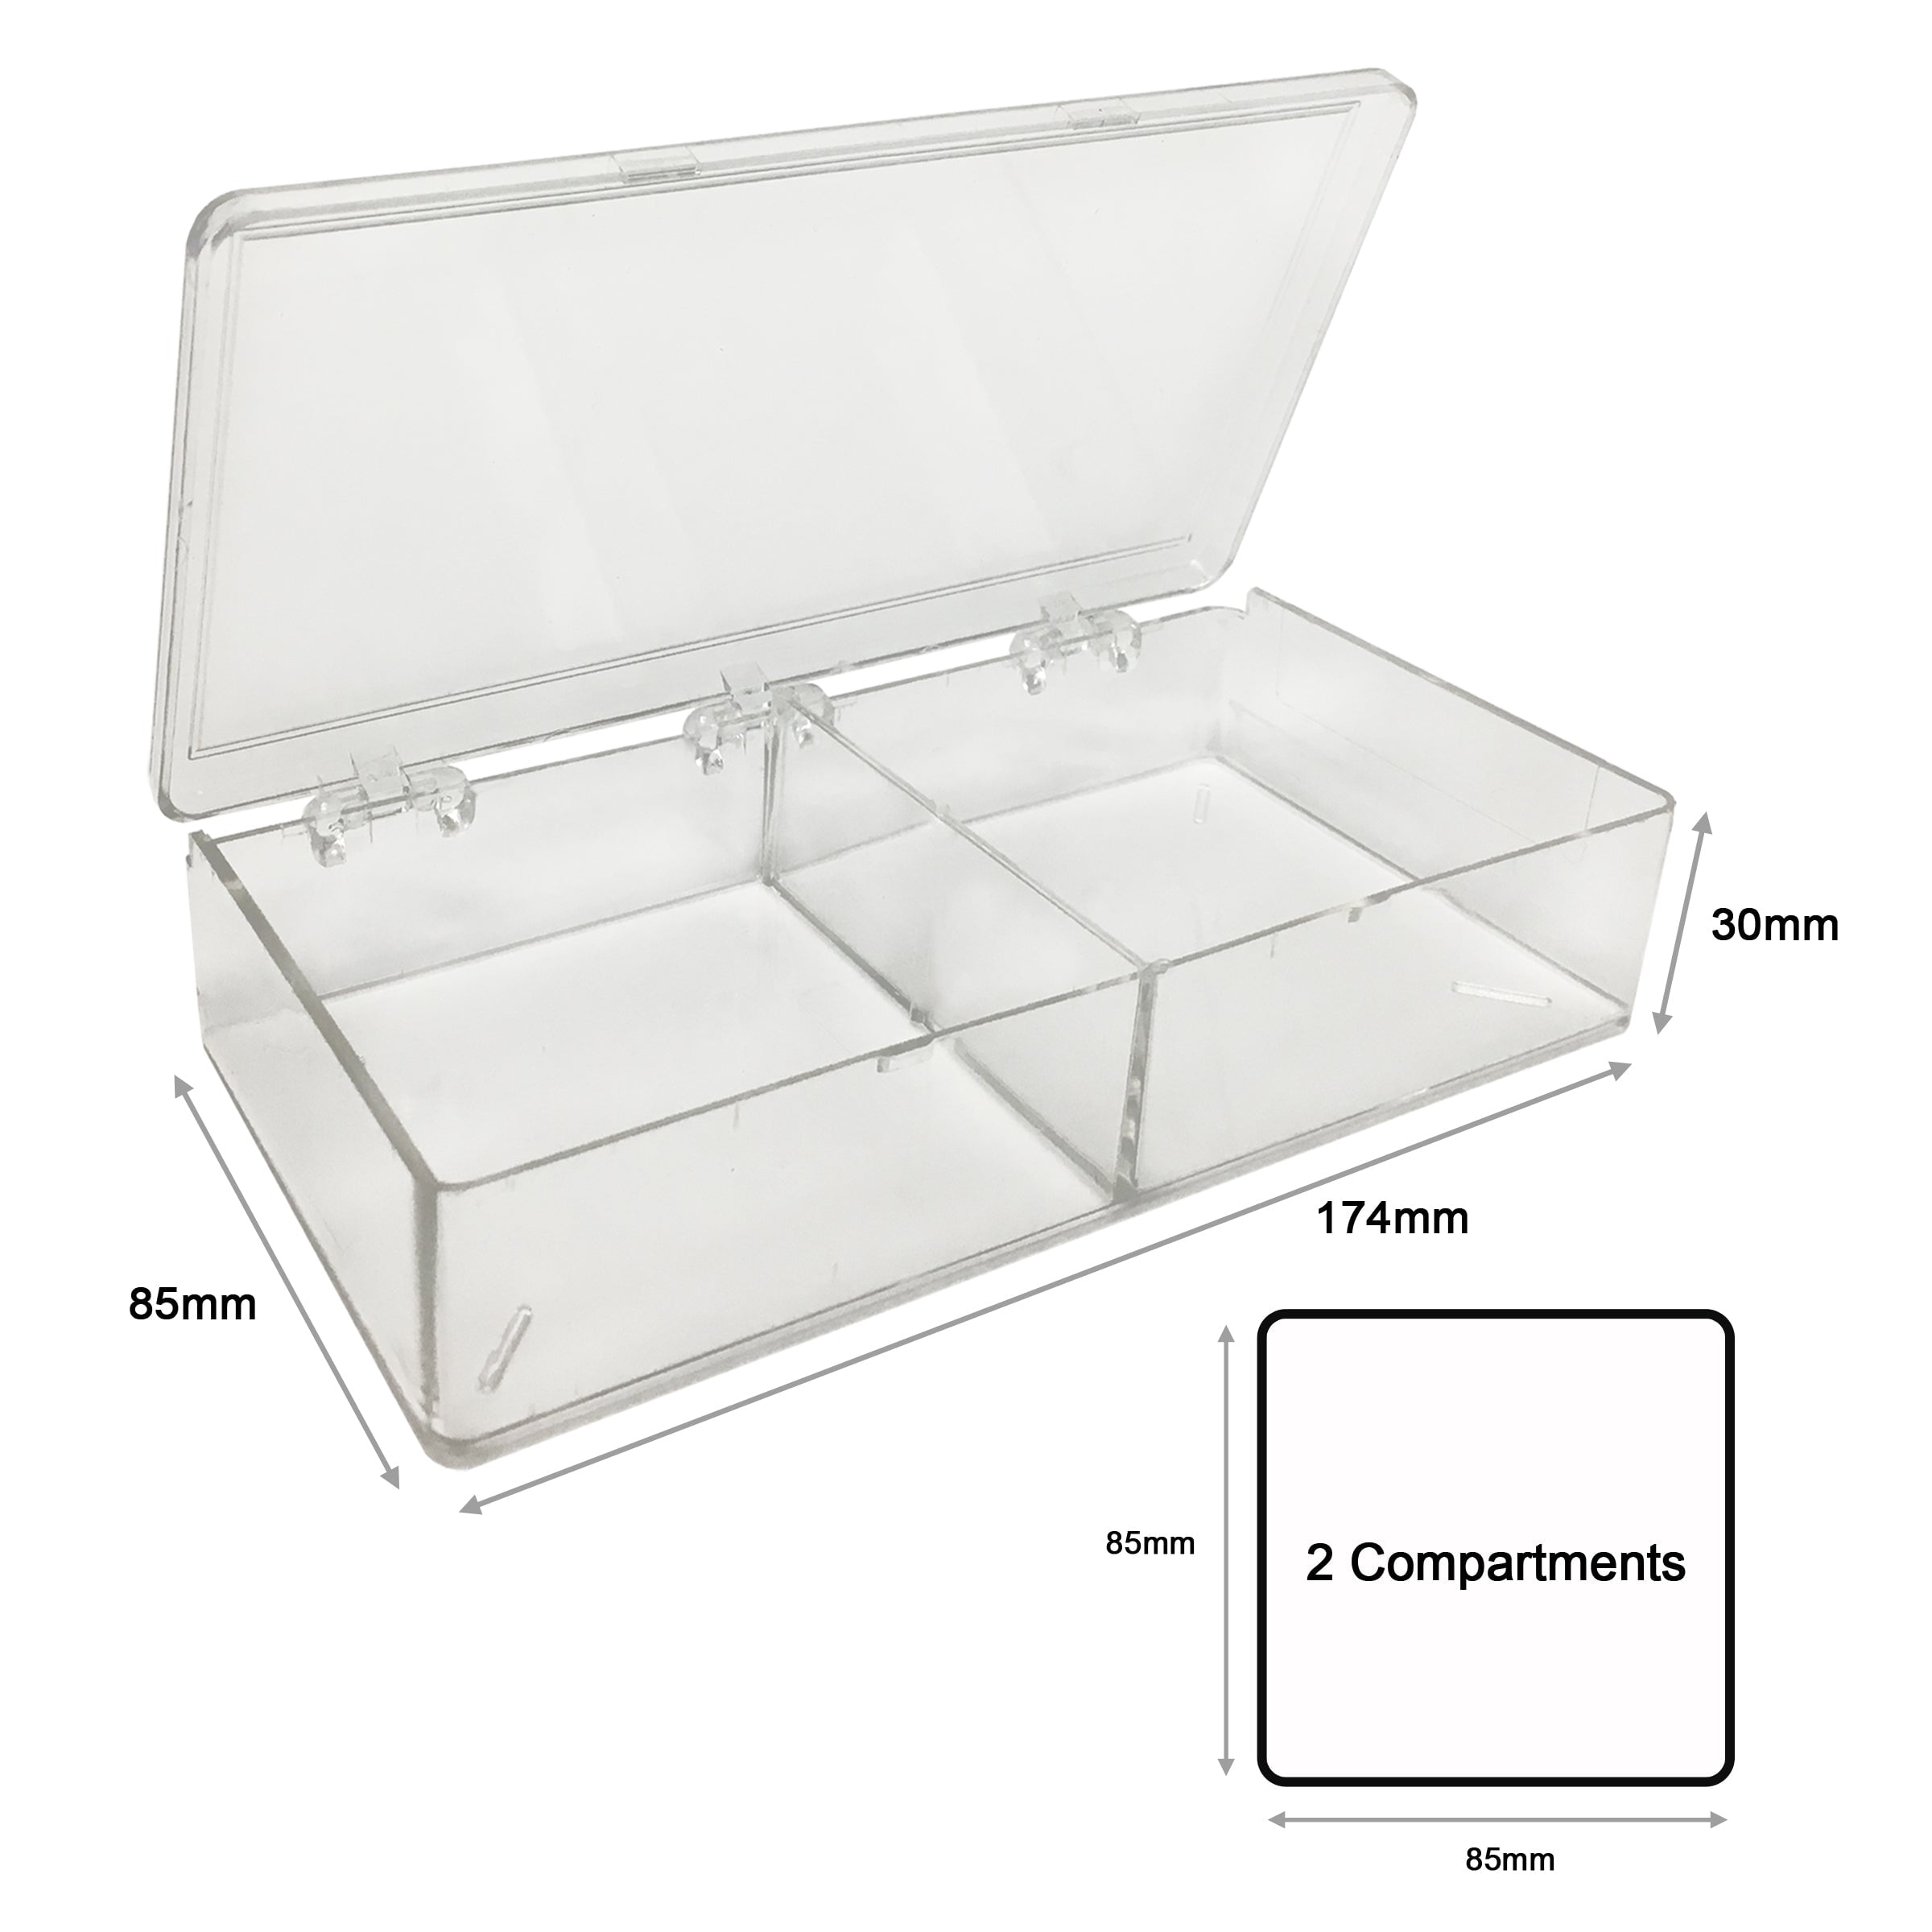 MTC Bio B1212 BlotBox, 2 compartments, 85 x 85 x 30mm each, 6pk